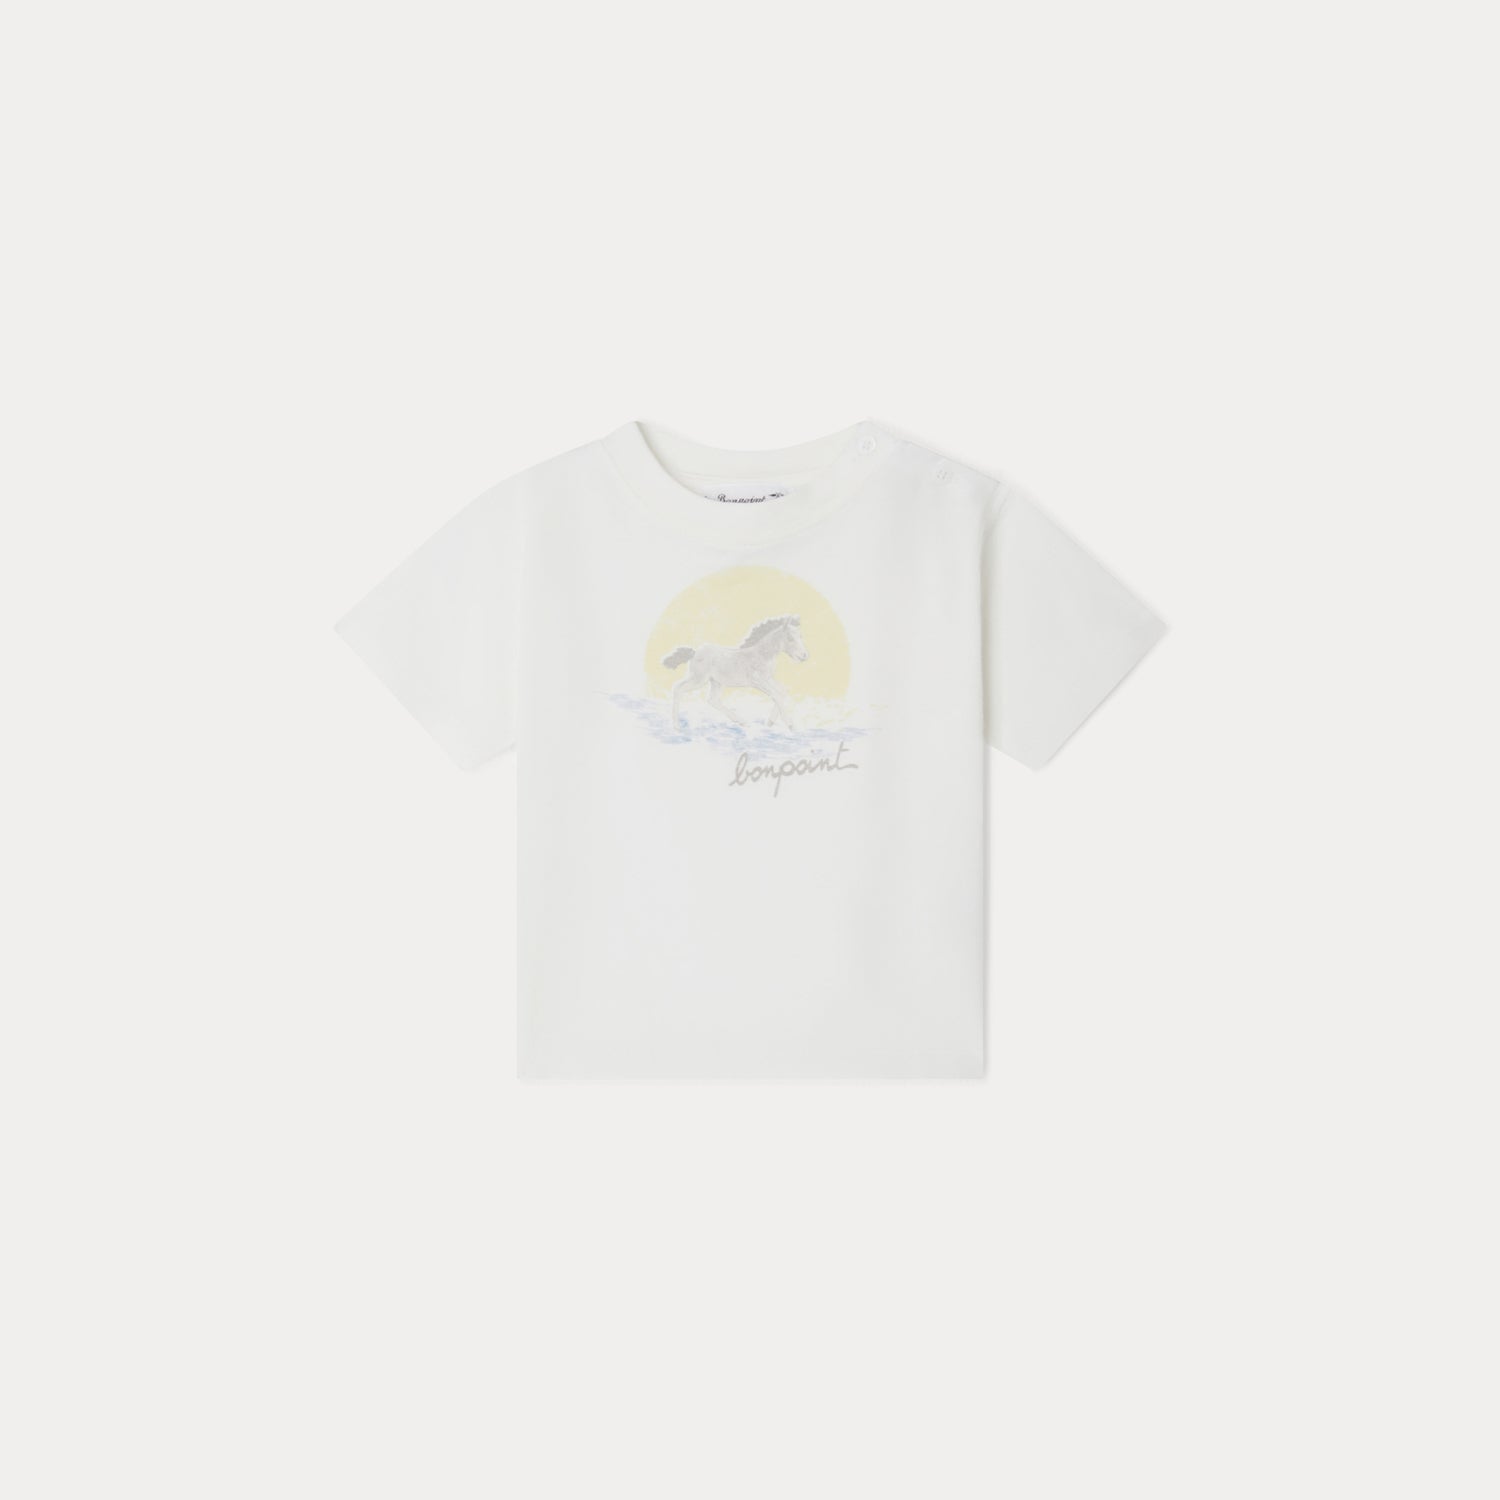 Baby Boys White Printed Cotton T-Shirt